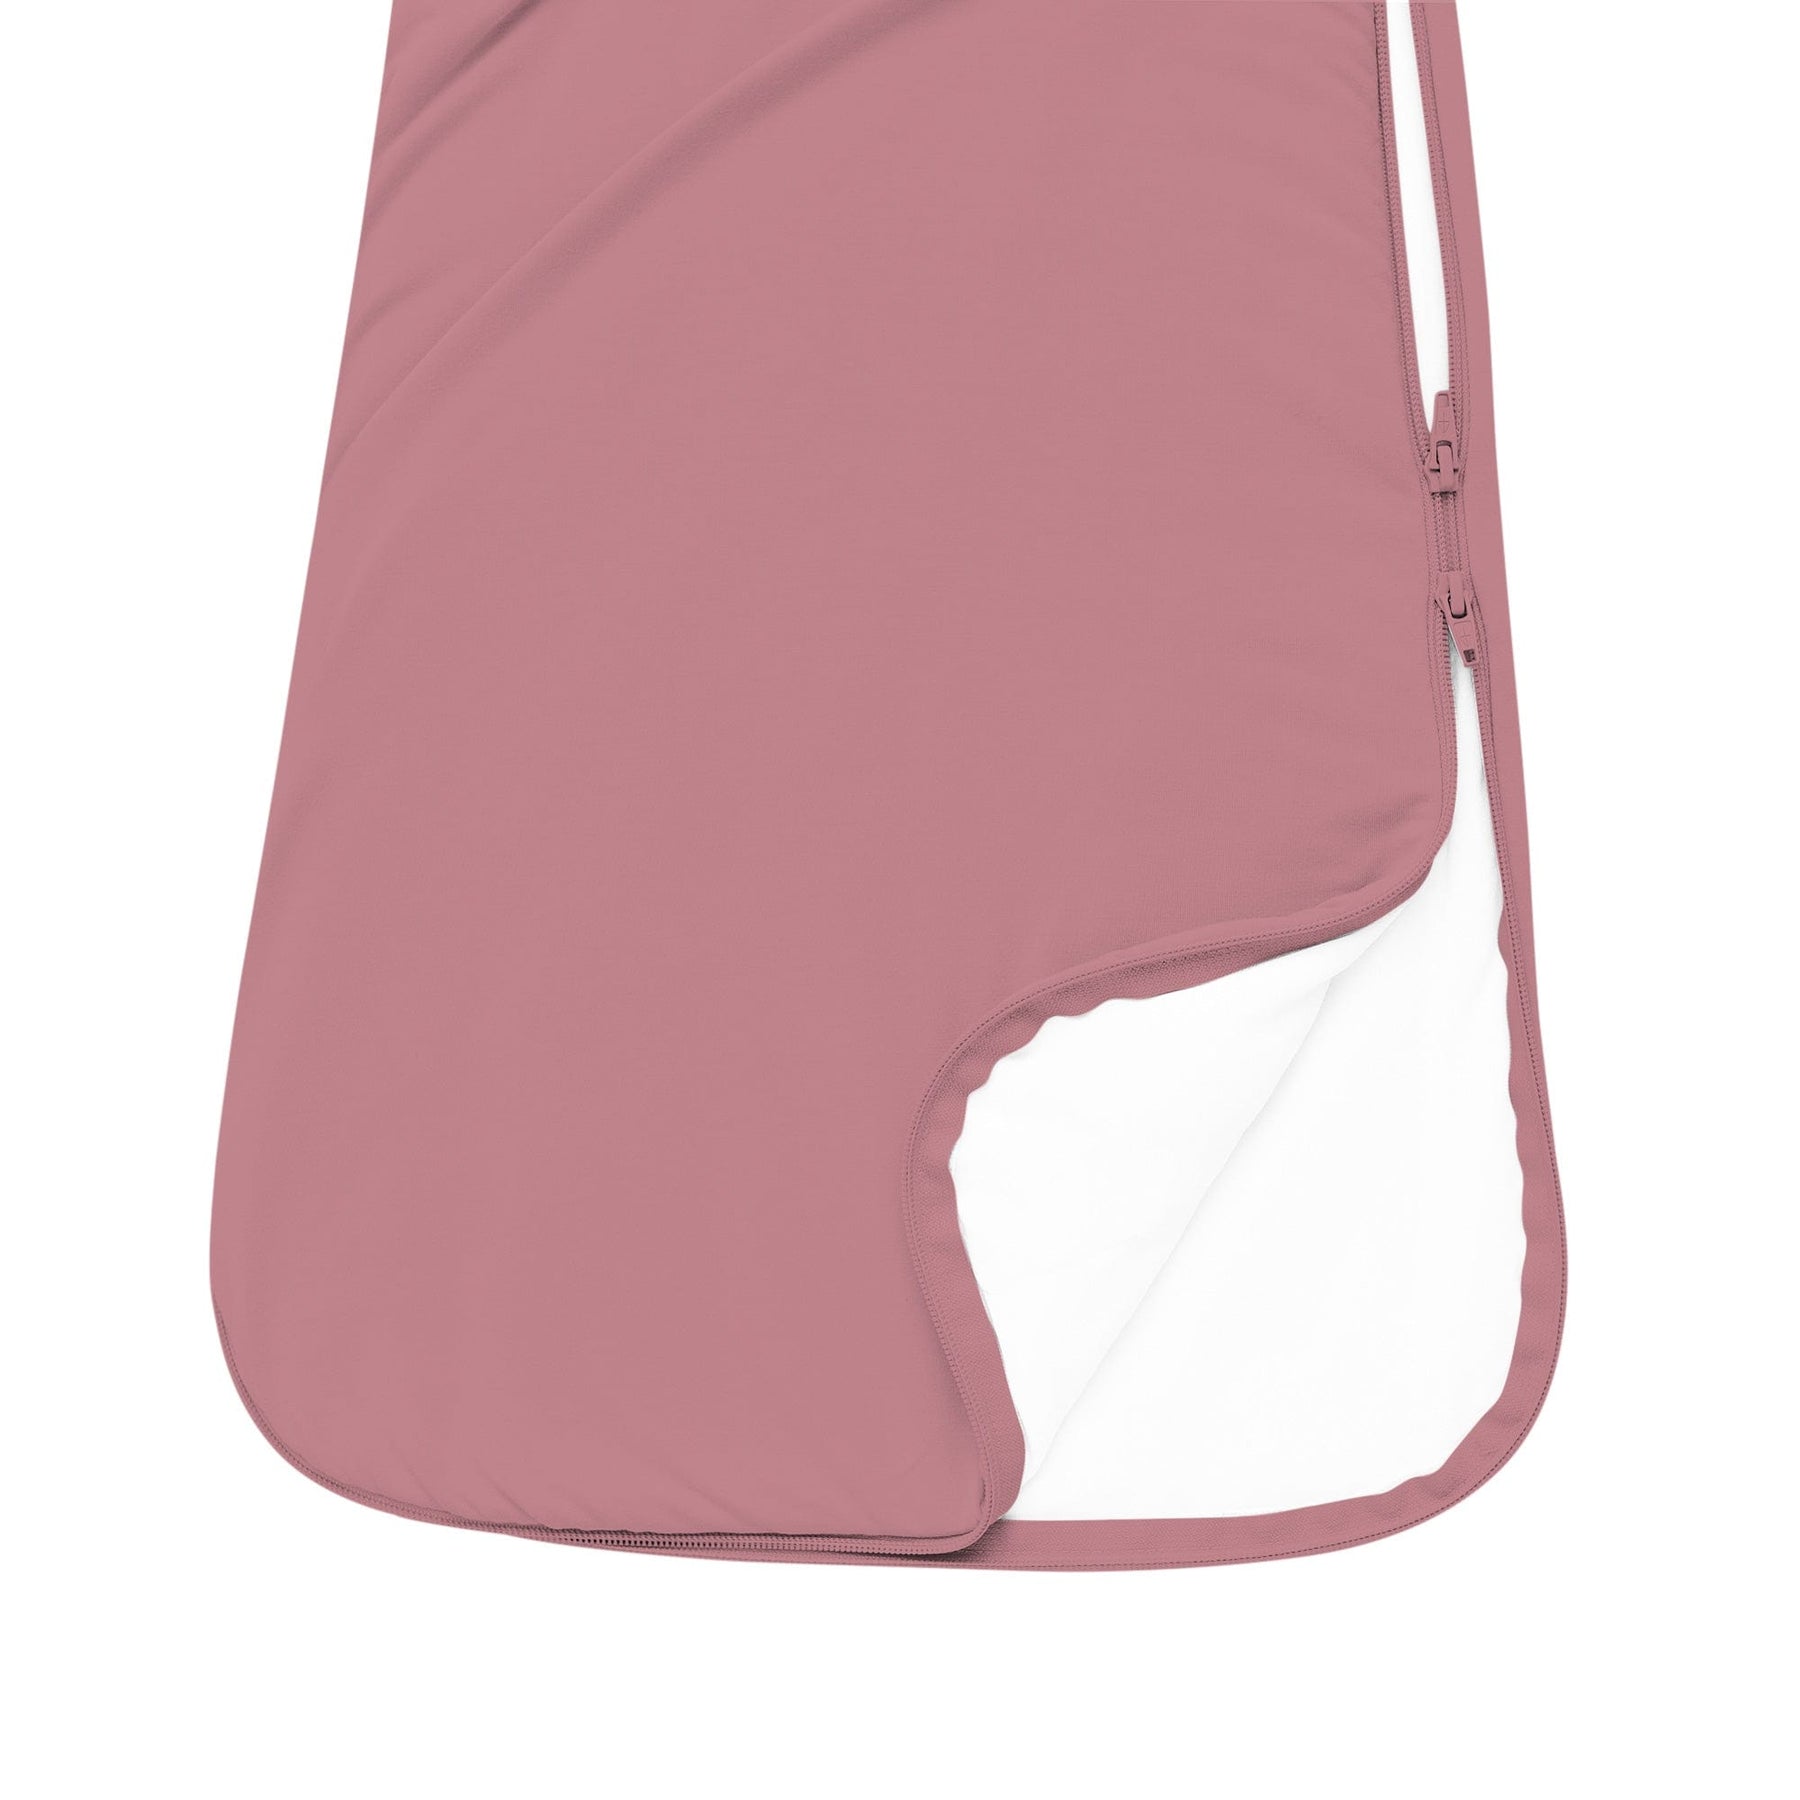 Kyte Baby bamboo Sleep Bag in Dusty Rose 1.0 double zipper